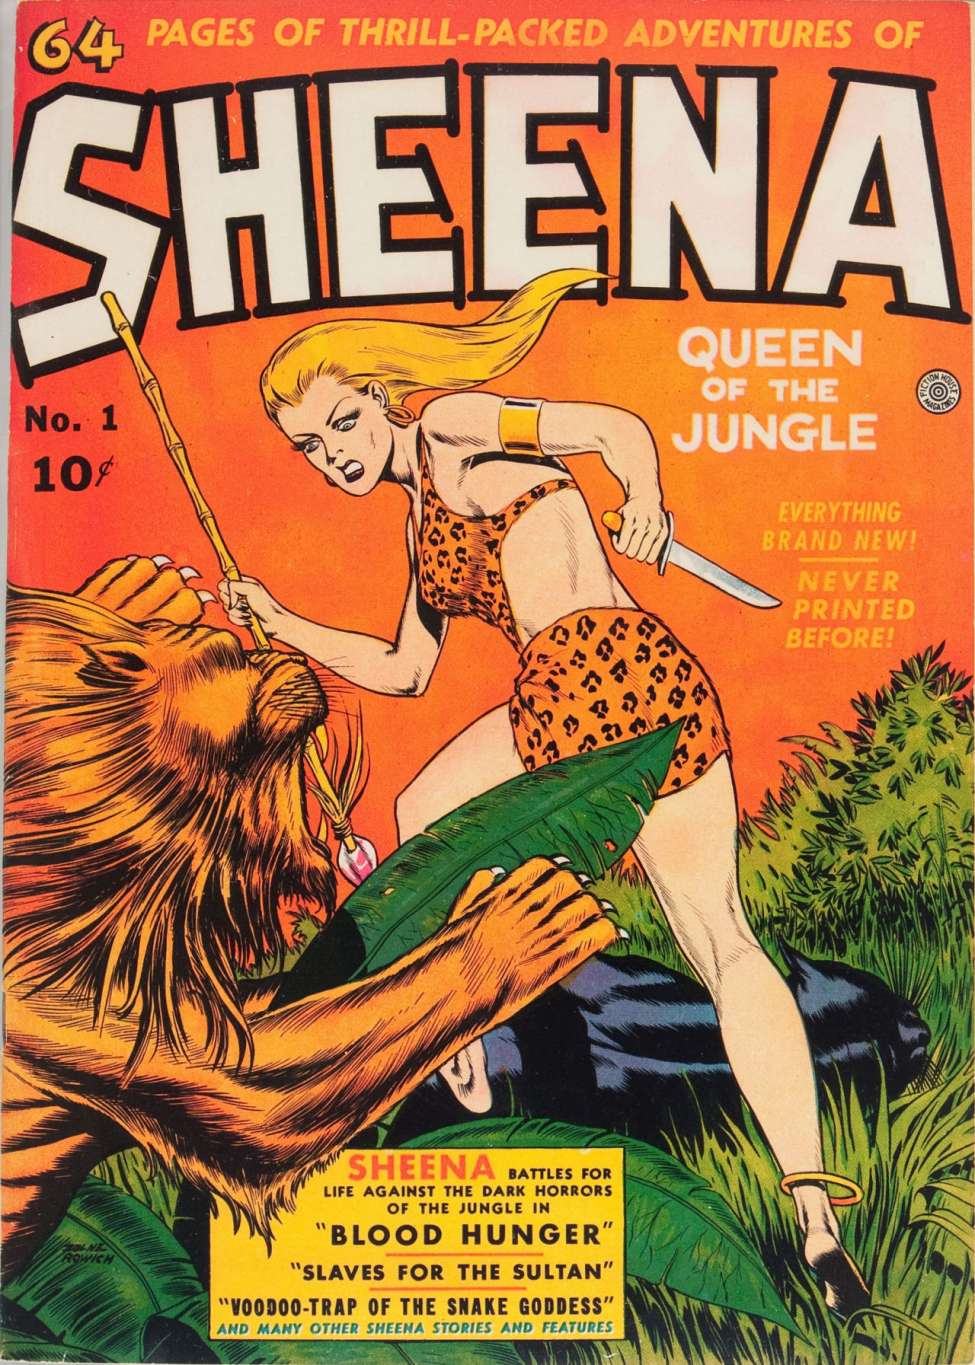 Jungle queen. Sheena Queen of the Jungle. Sheena комикс. Шина Королева джунглей комикс. Комикс Sheena Queen of the Jungle.